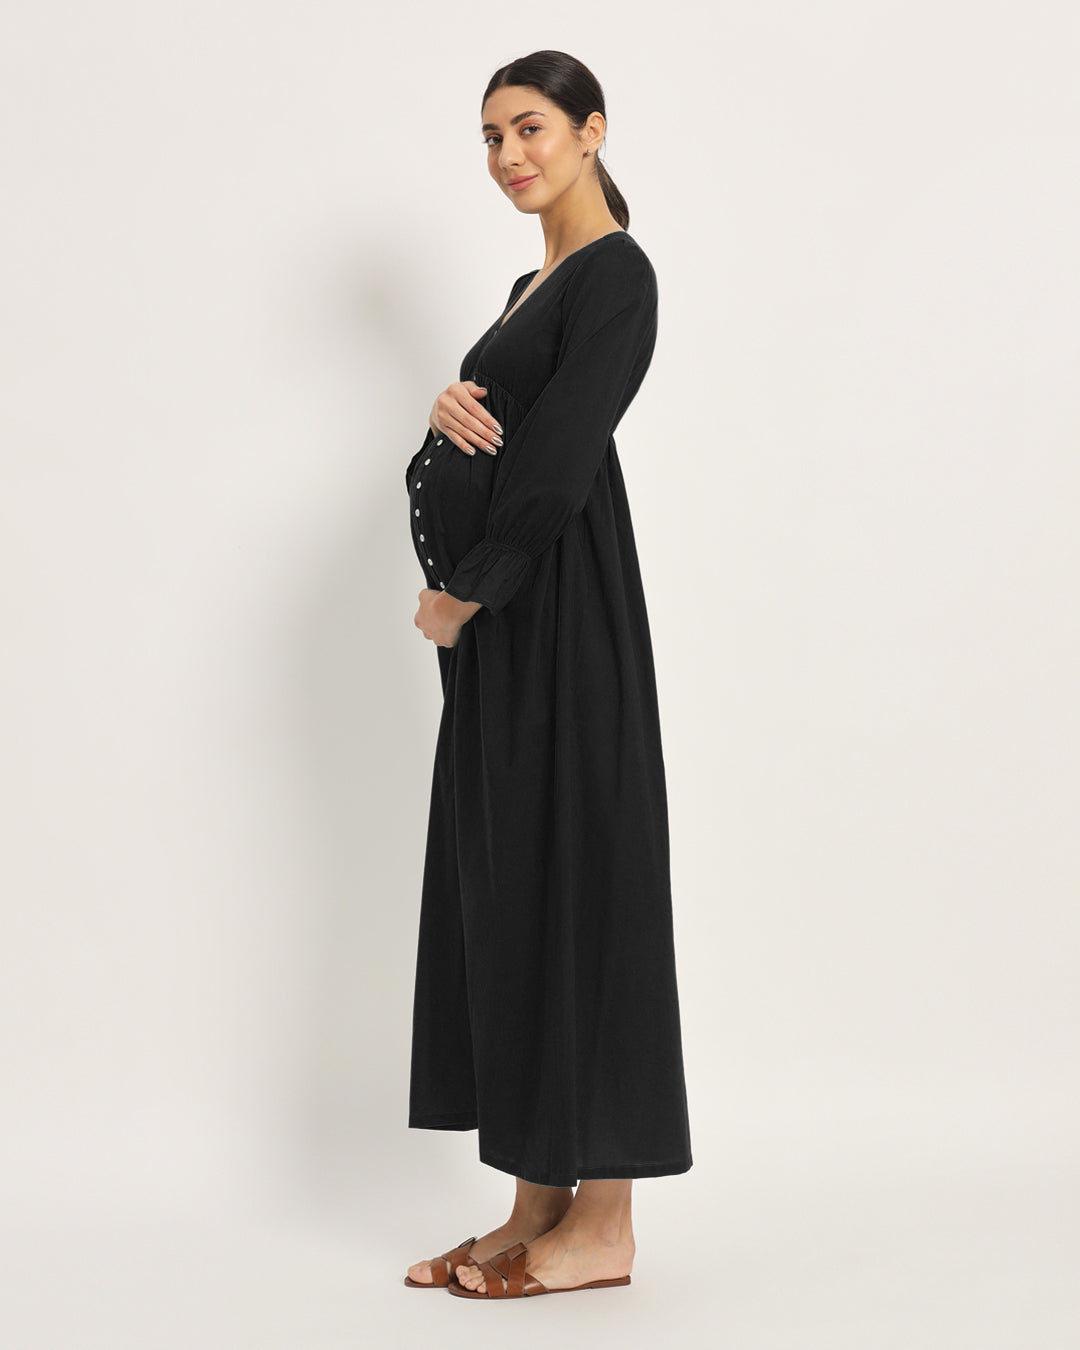 Classic Black Glowing Bellies Maternity & Nursing Dress